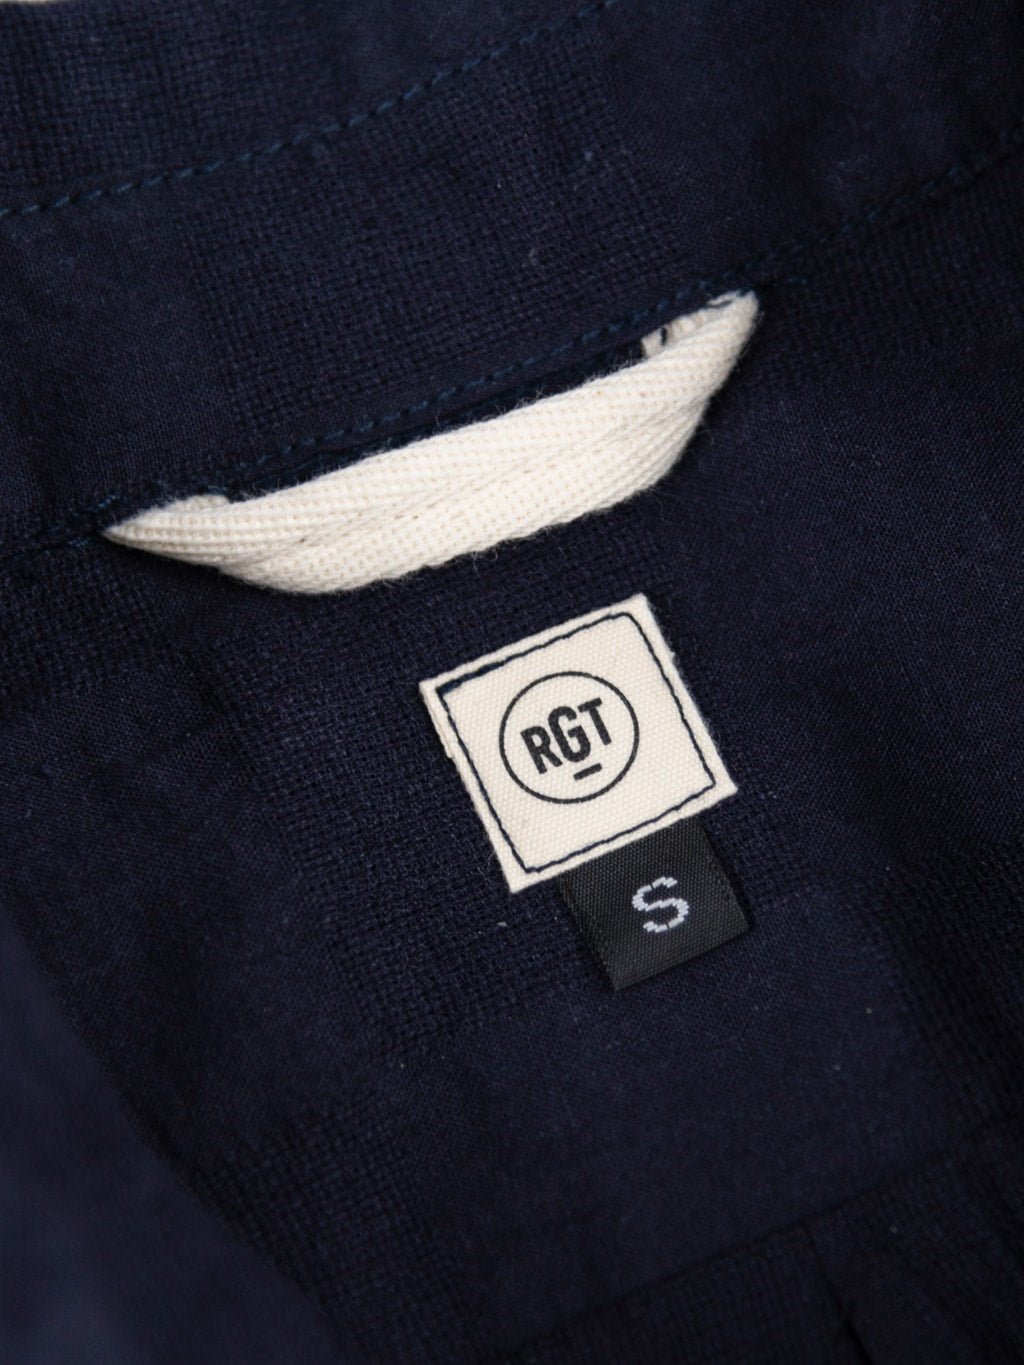 rogue territory jumper shirt navy checkered  logo label